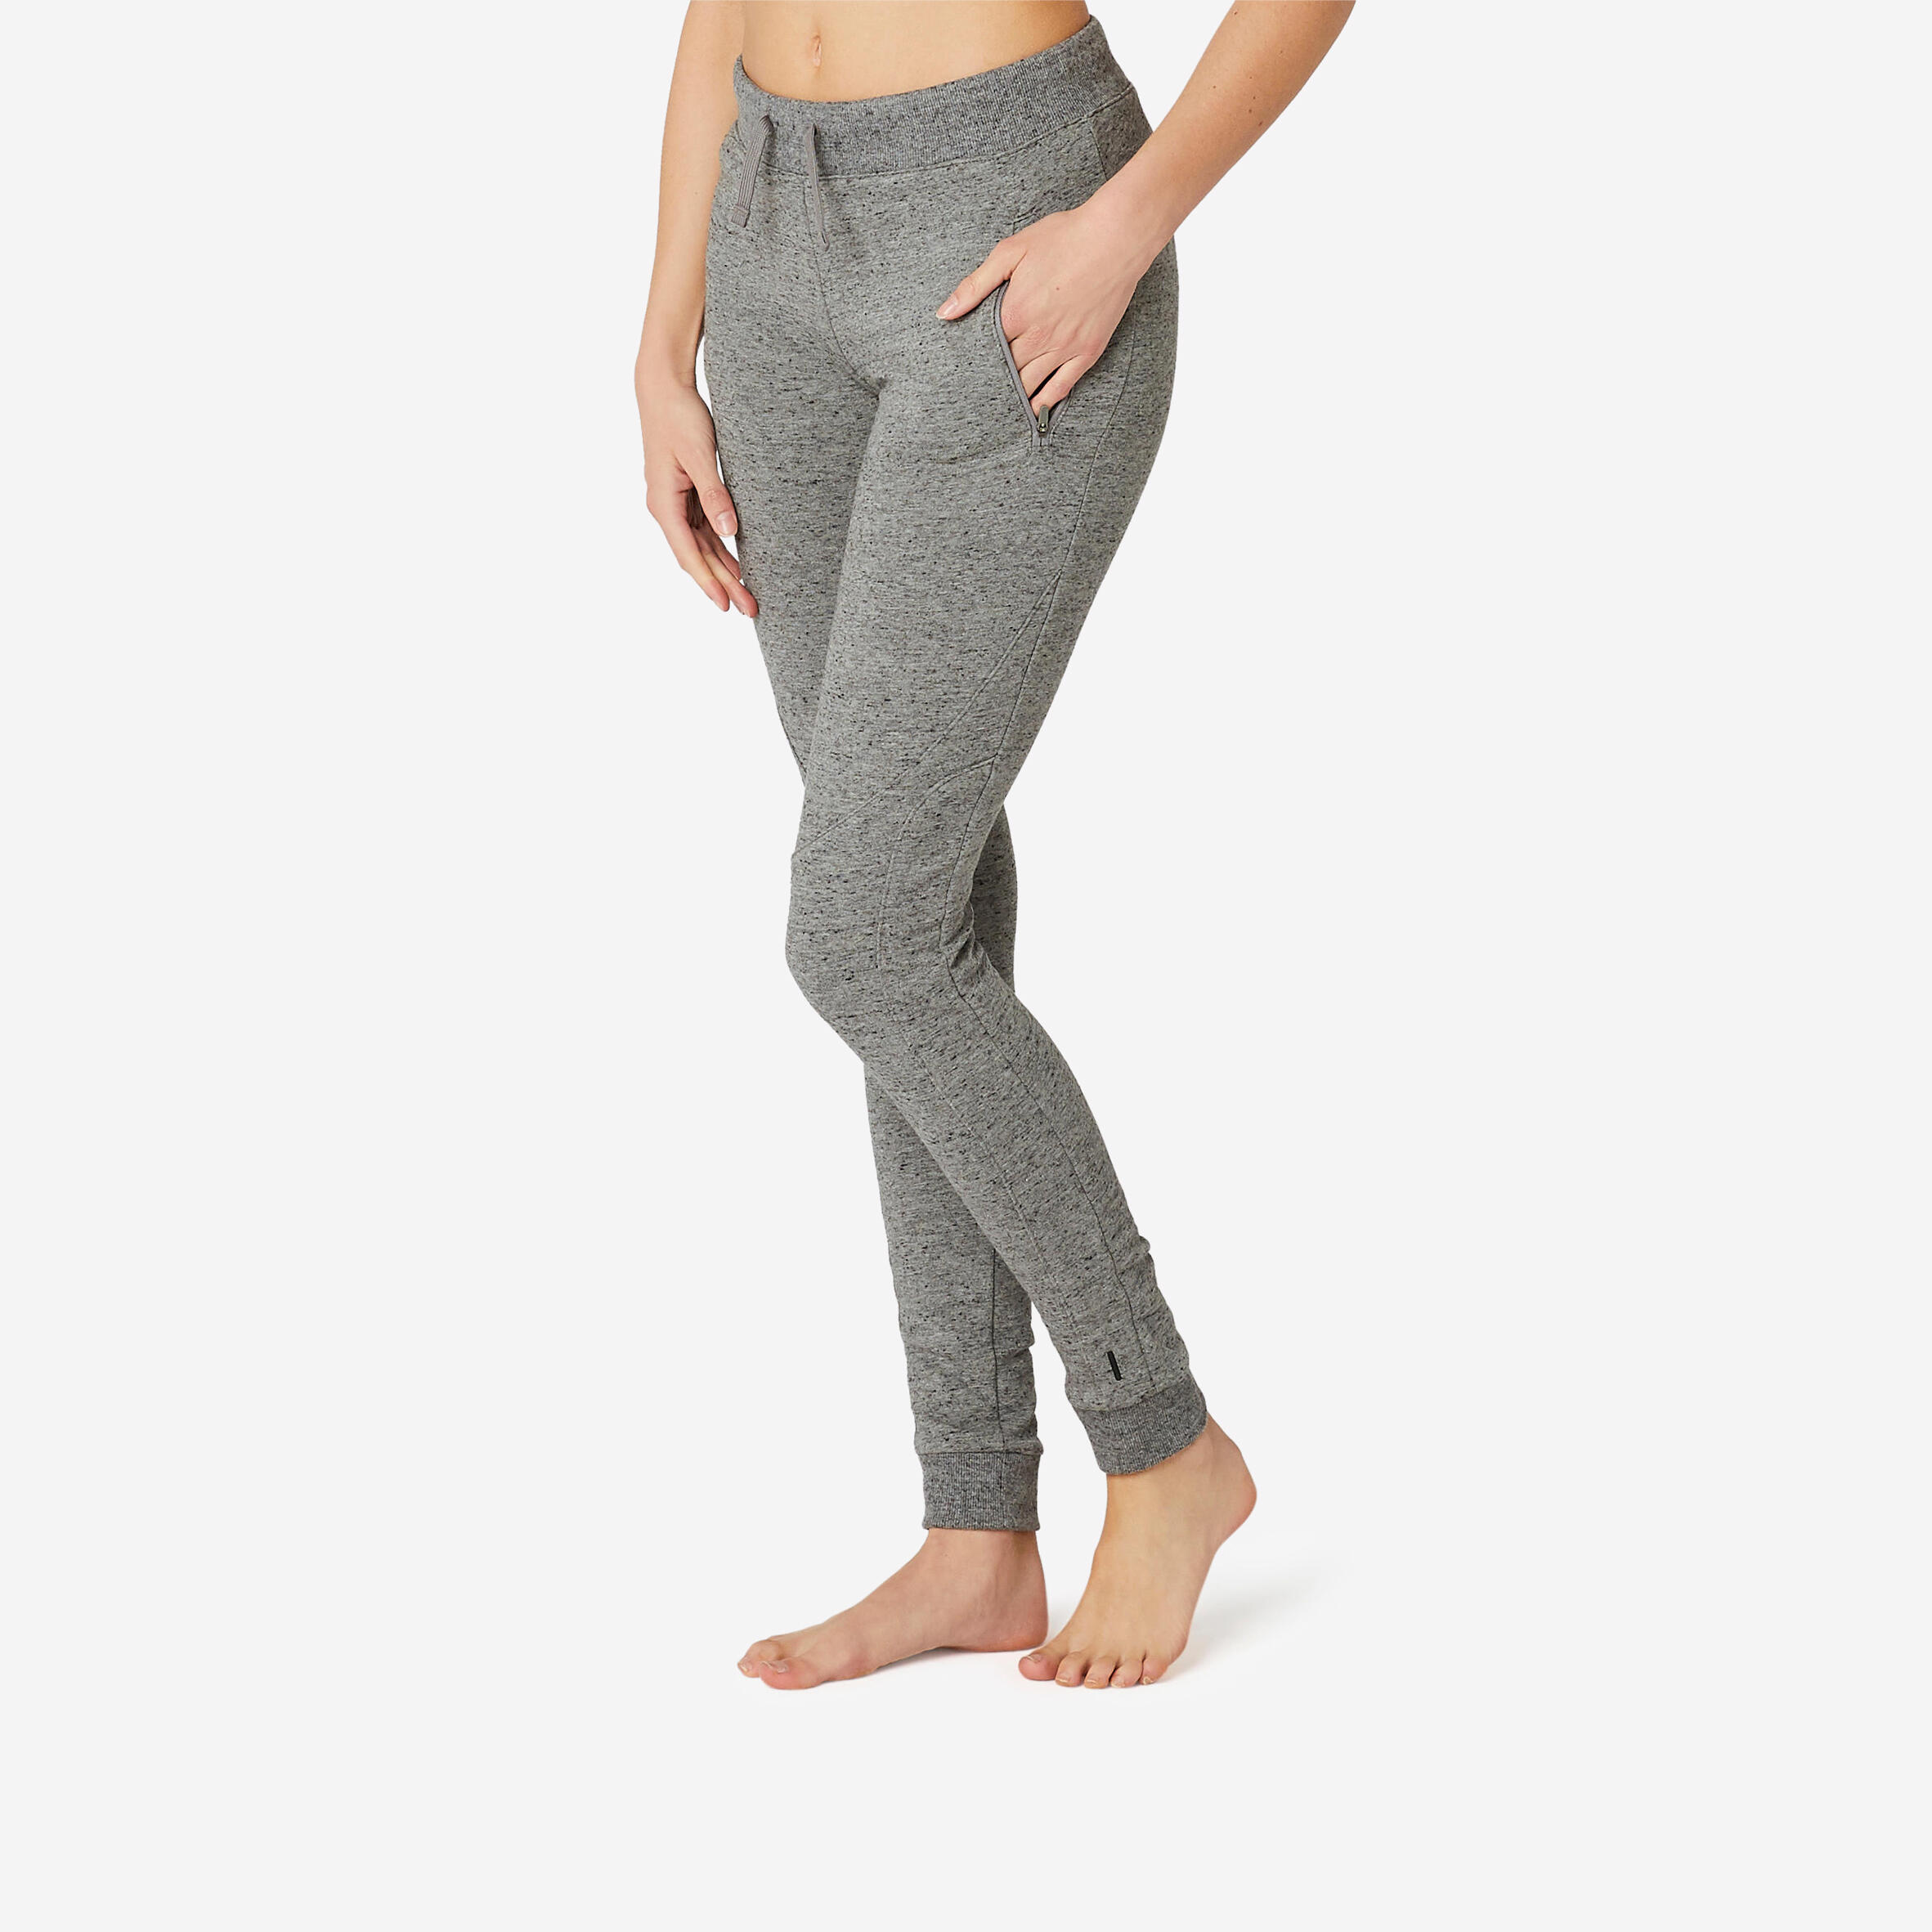 100 Gym Slim-Fit Jogging Pants - Women